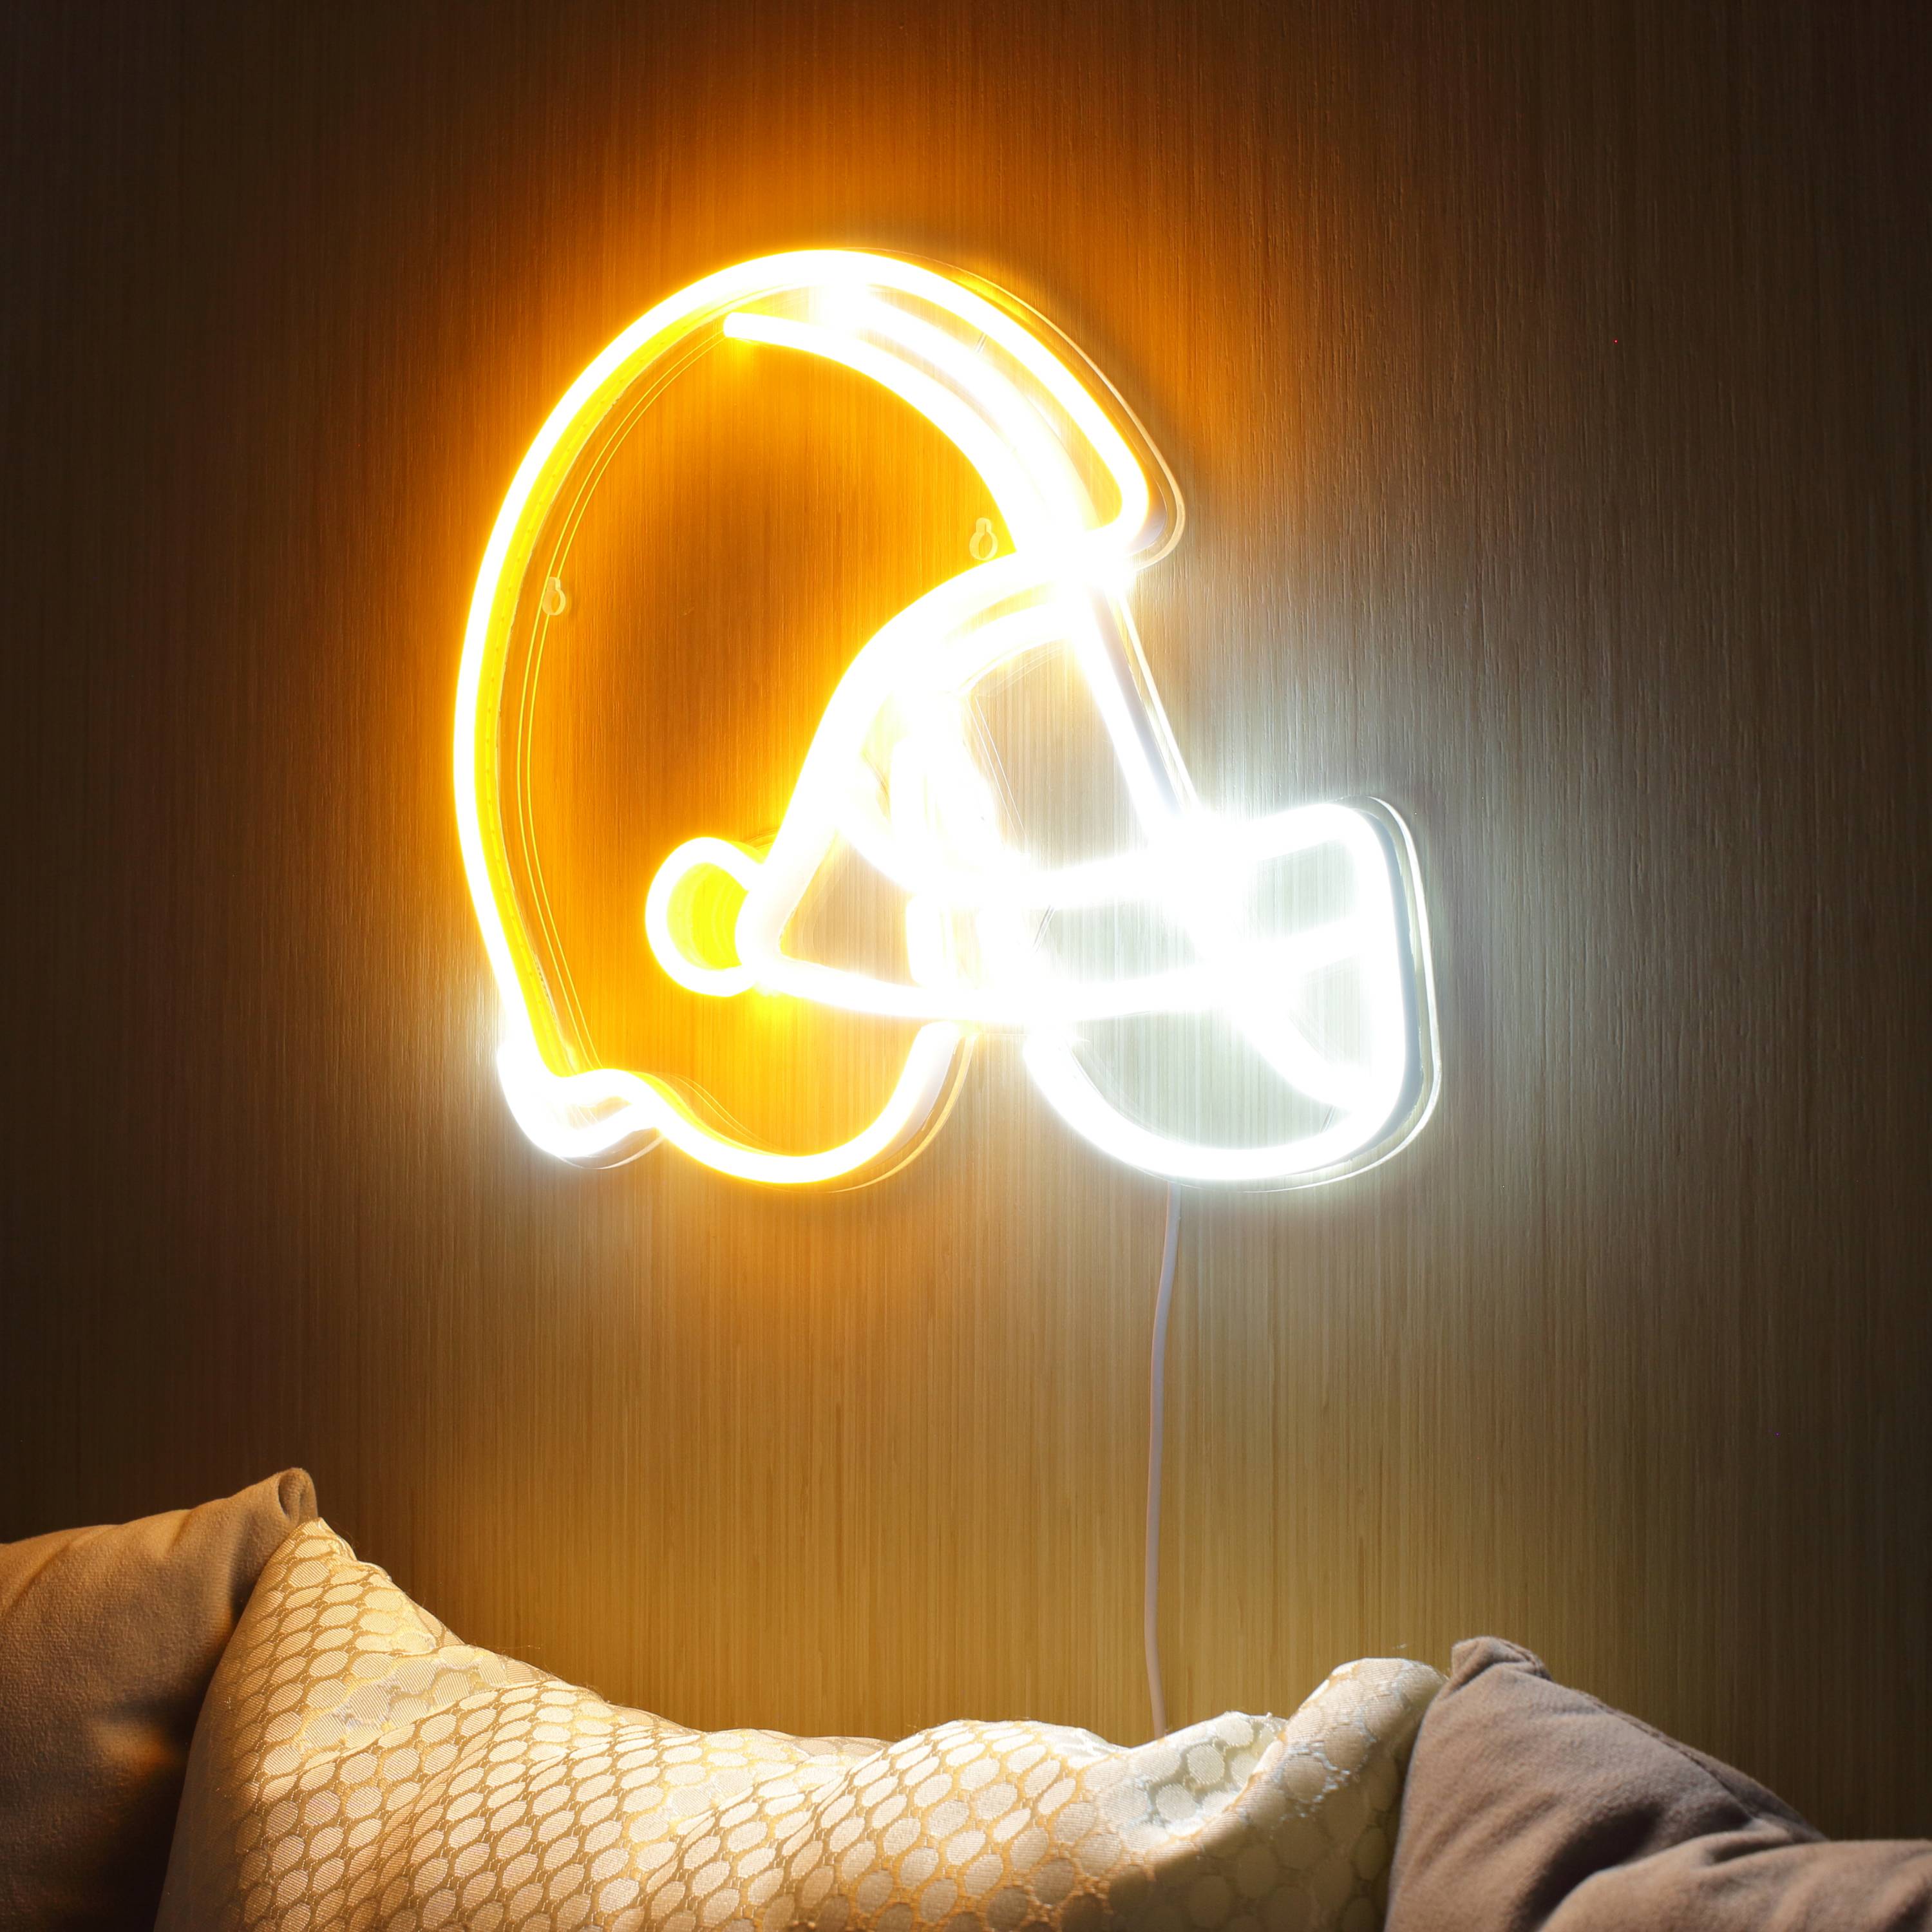 NFL Cleveland Browns LED Neon Sign